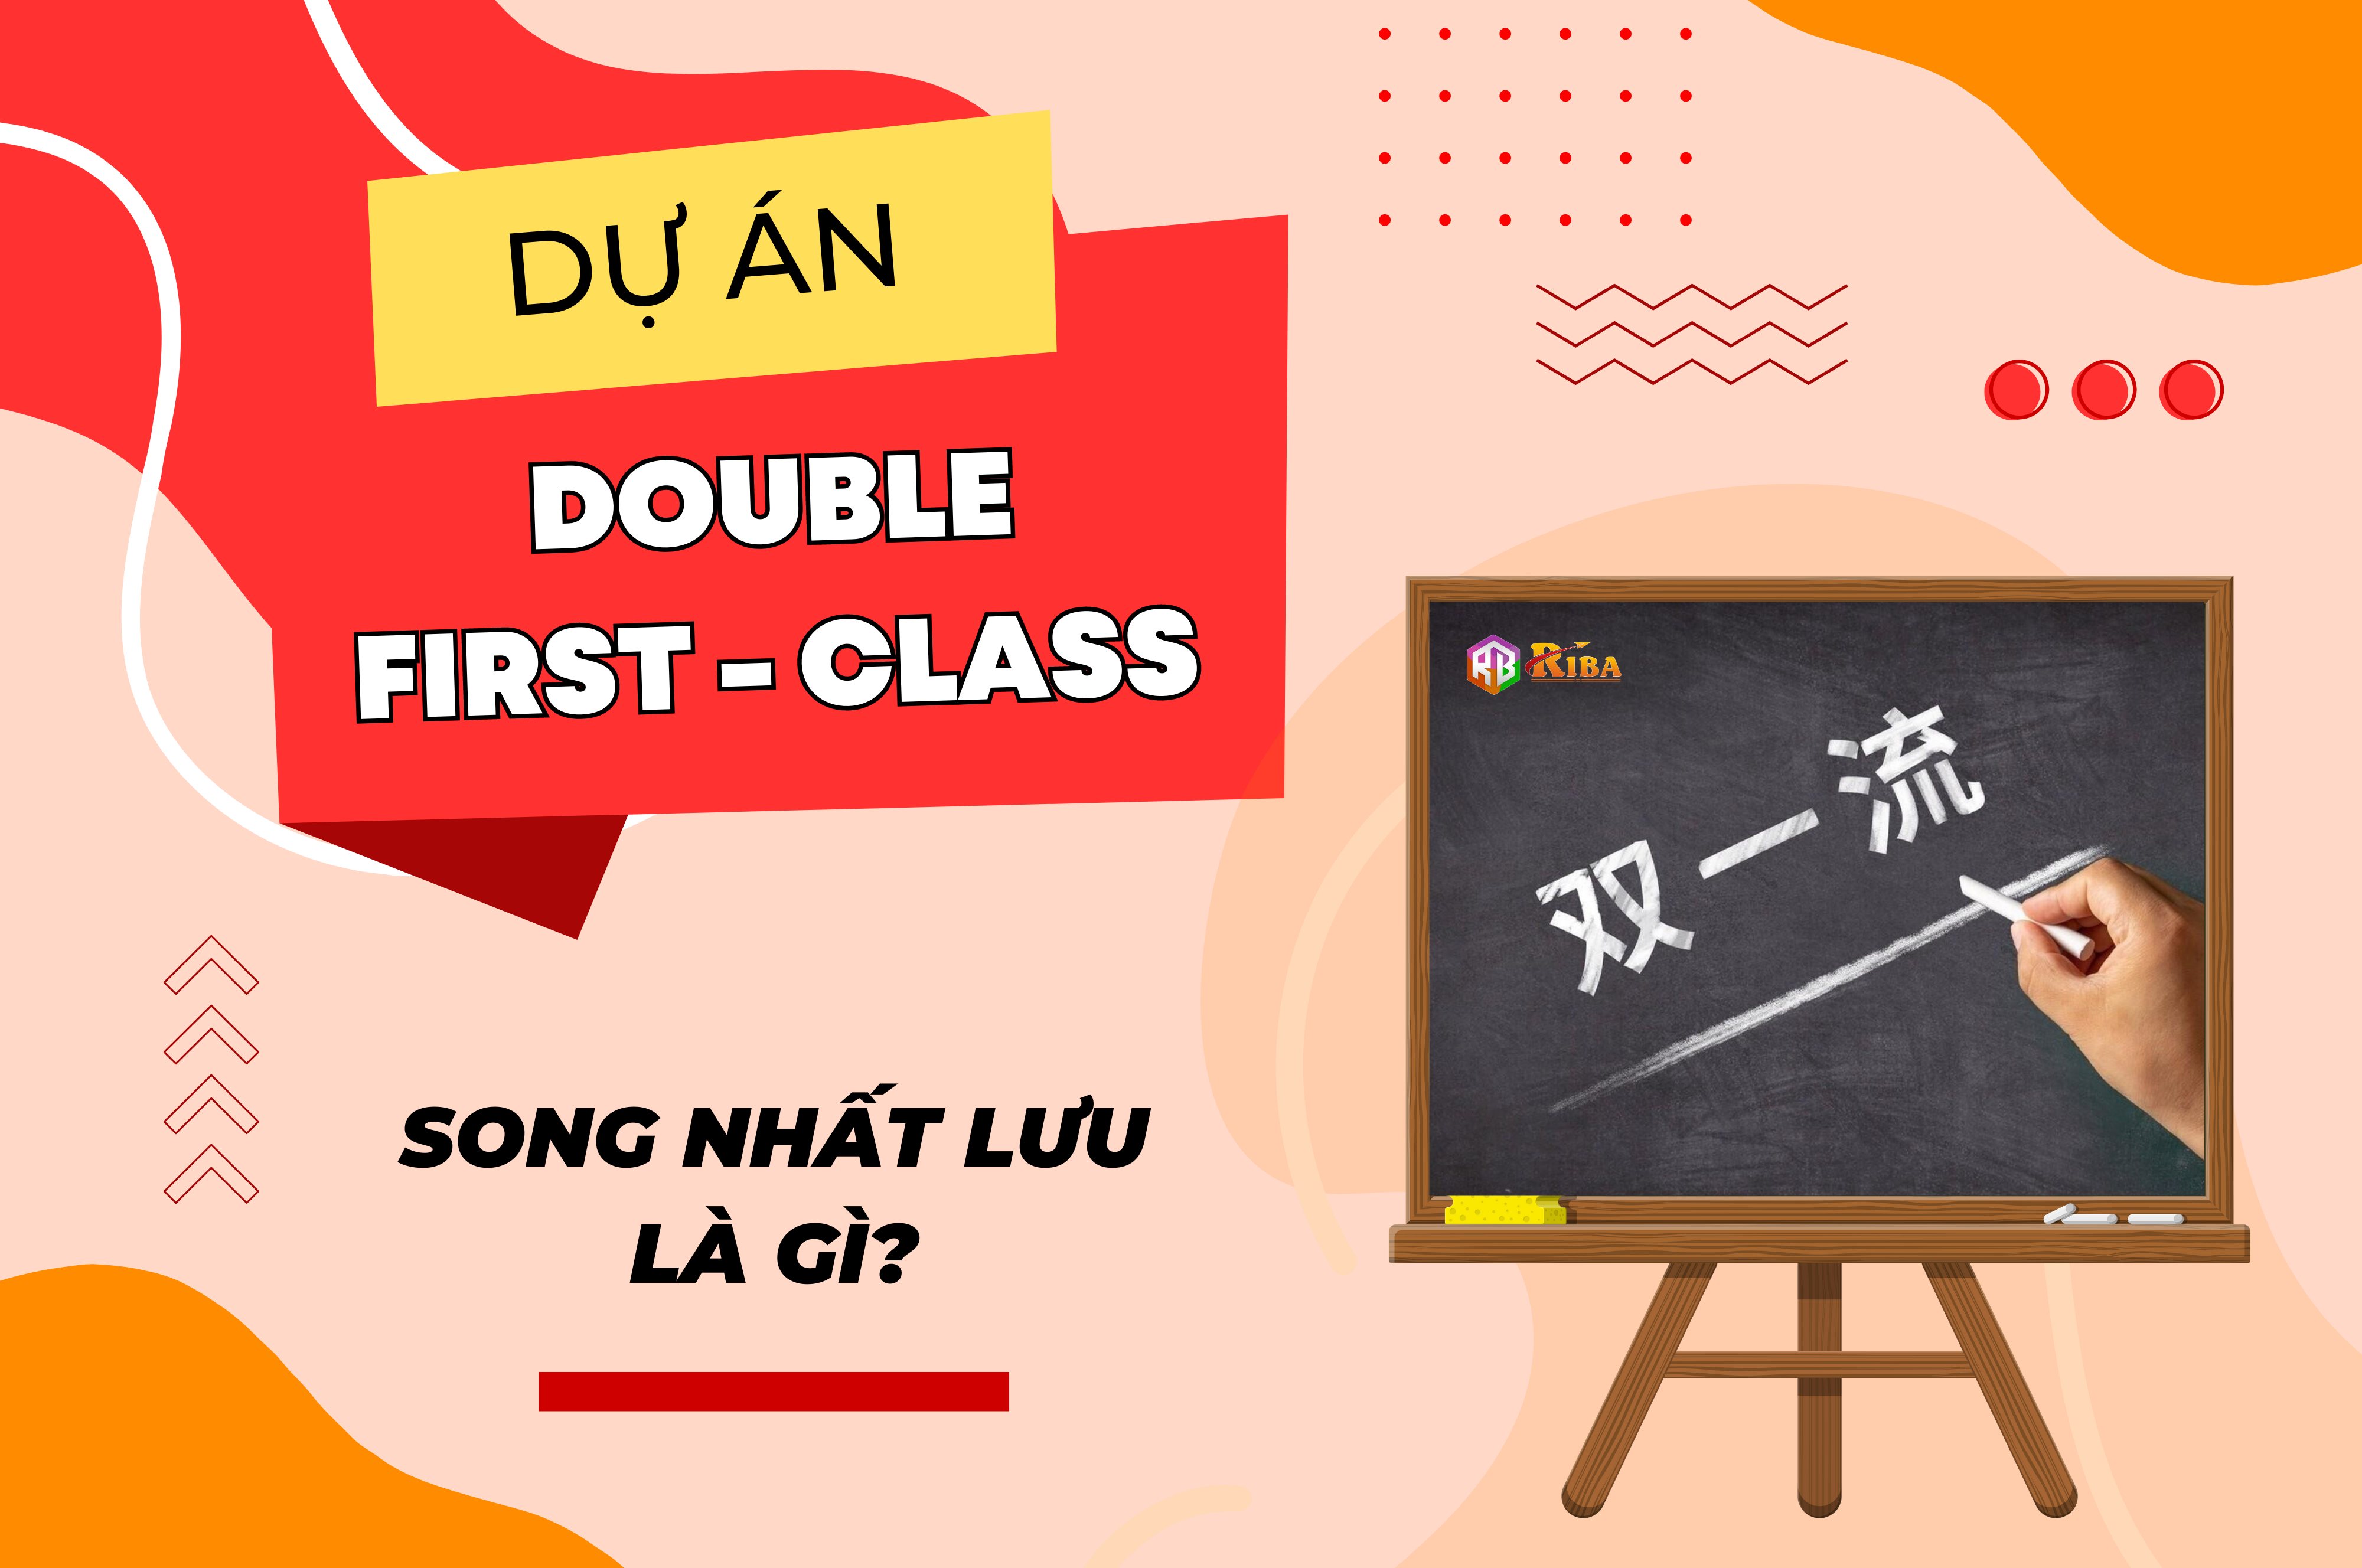 du-an-double-first-class-song-nhat-luu-la-gi.